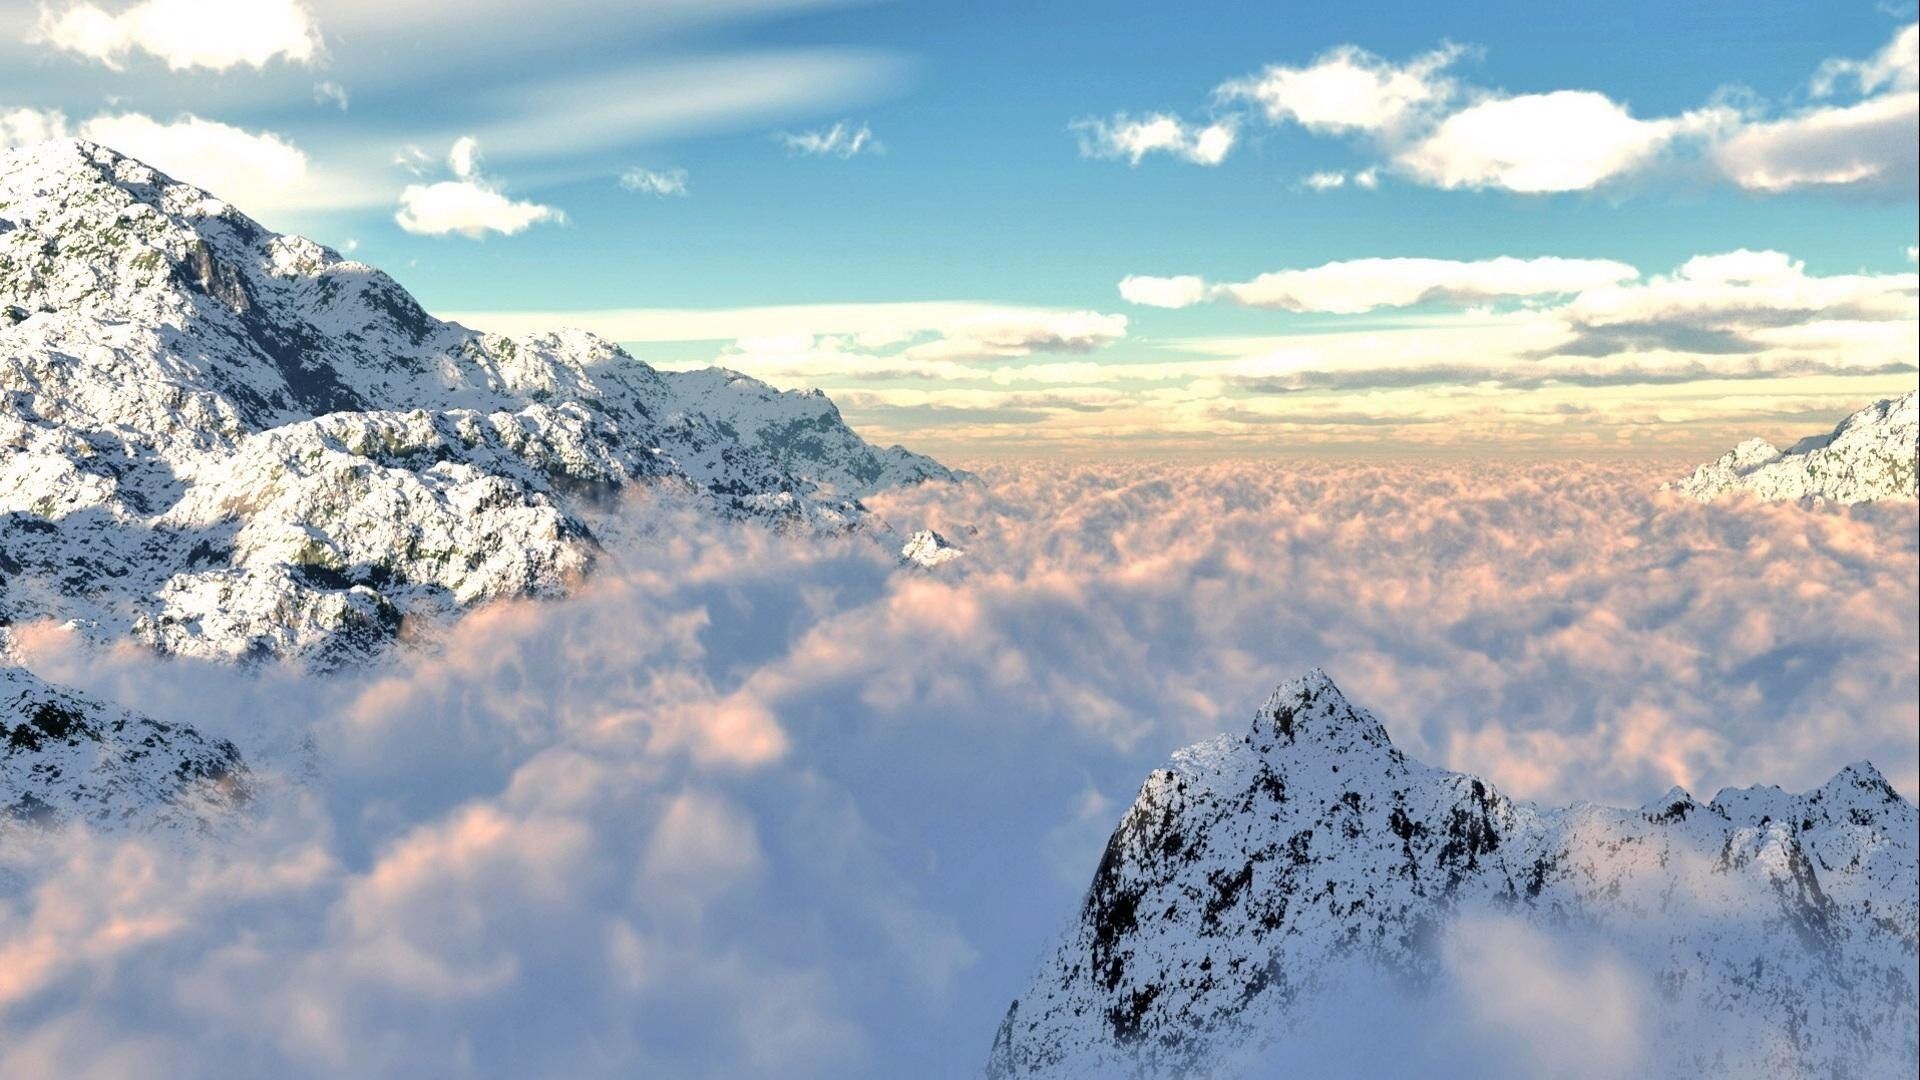 Mountain View above Cloud Wallpaper .hdnicewallpaper.com